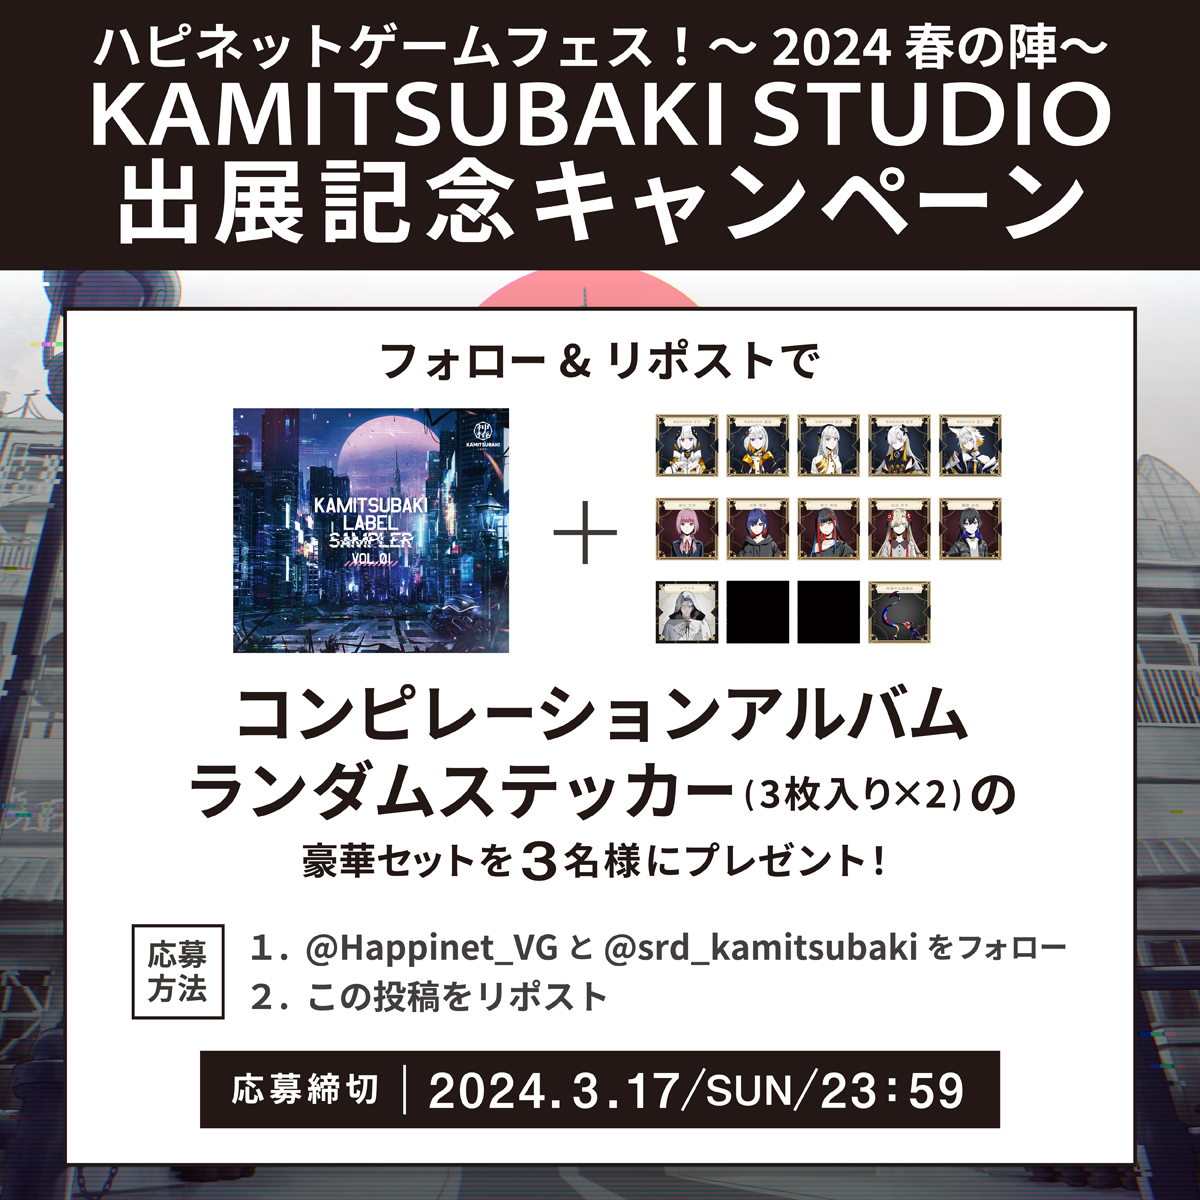 KAMITSUBAKI STUDIO出展記念キャンペーン